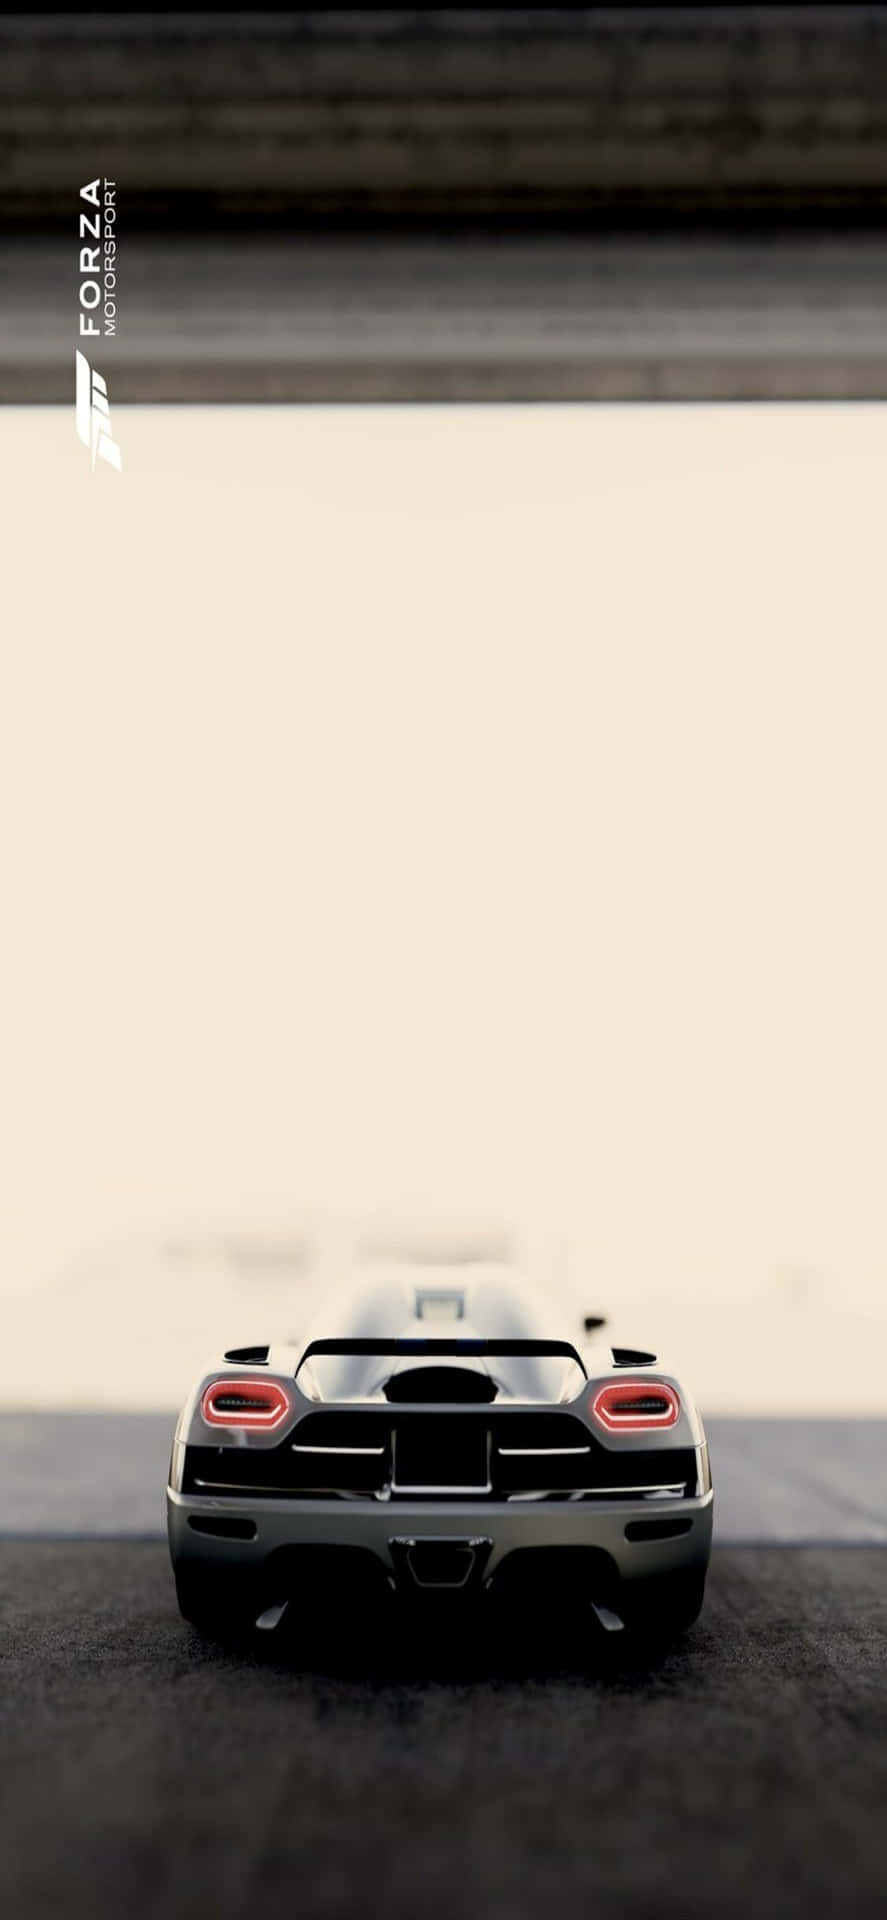 Koenigseggone Iphone X Forza Motorsport 7 Bakgrundsbild.